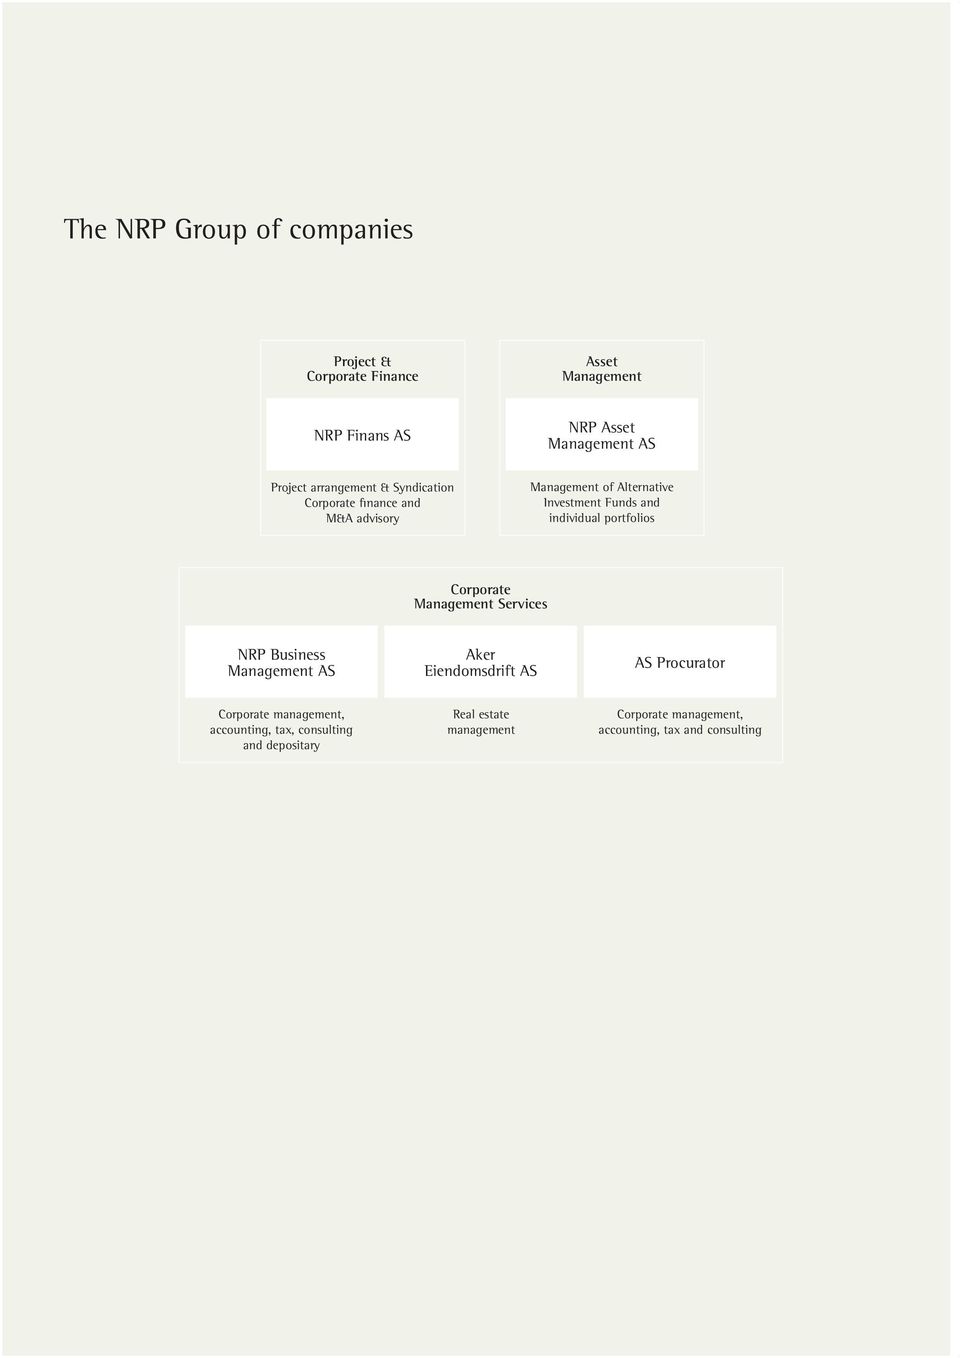 portfolios Corporate Management Services NRP Business Management AS Aker Eiendomsdrift AS AS Procurator Corporate